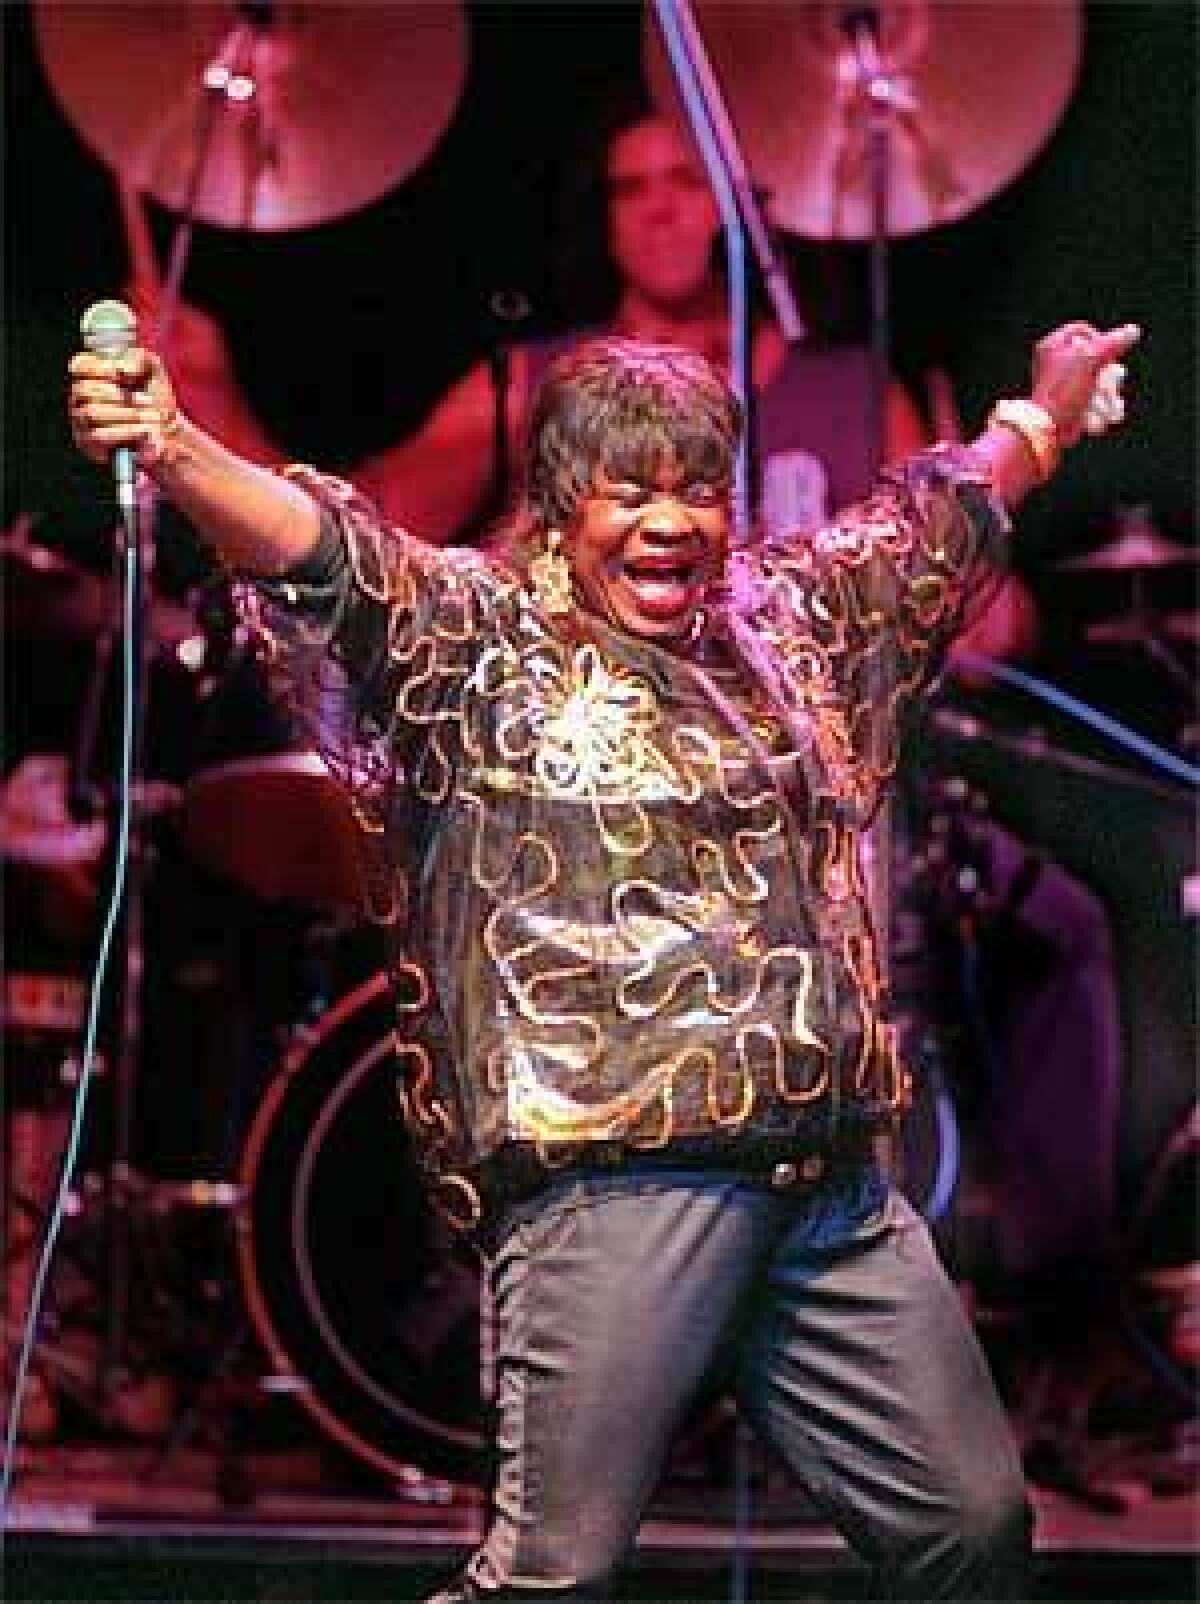 Koko Taylor performs at the Galaxy Theatre in Santa Ana in 1997.